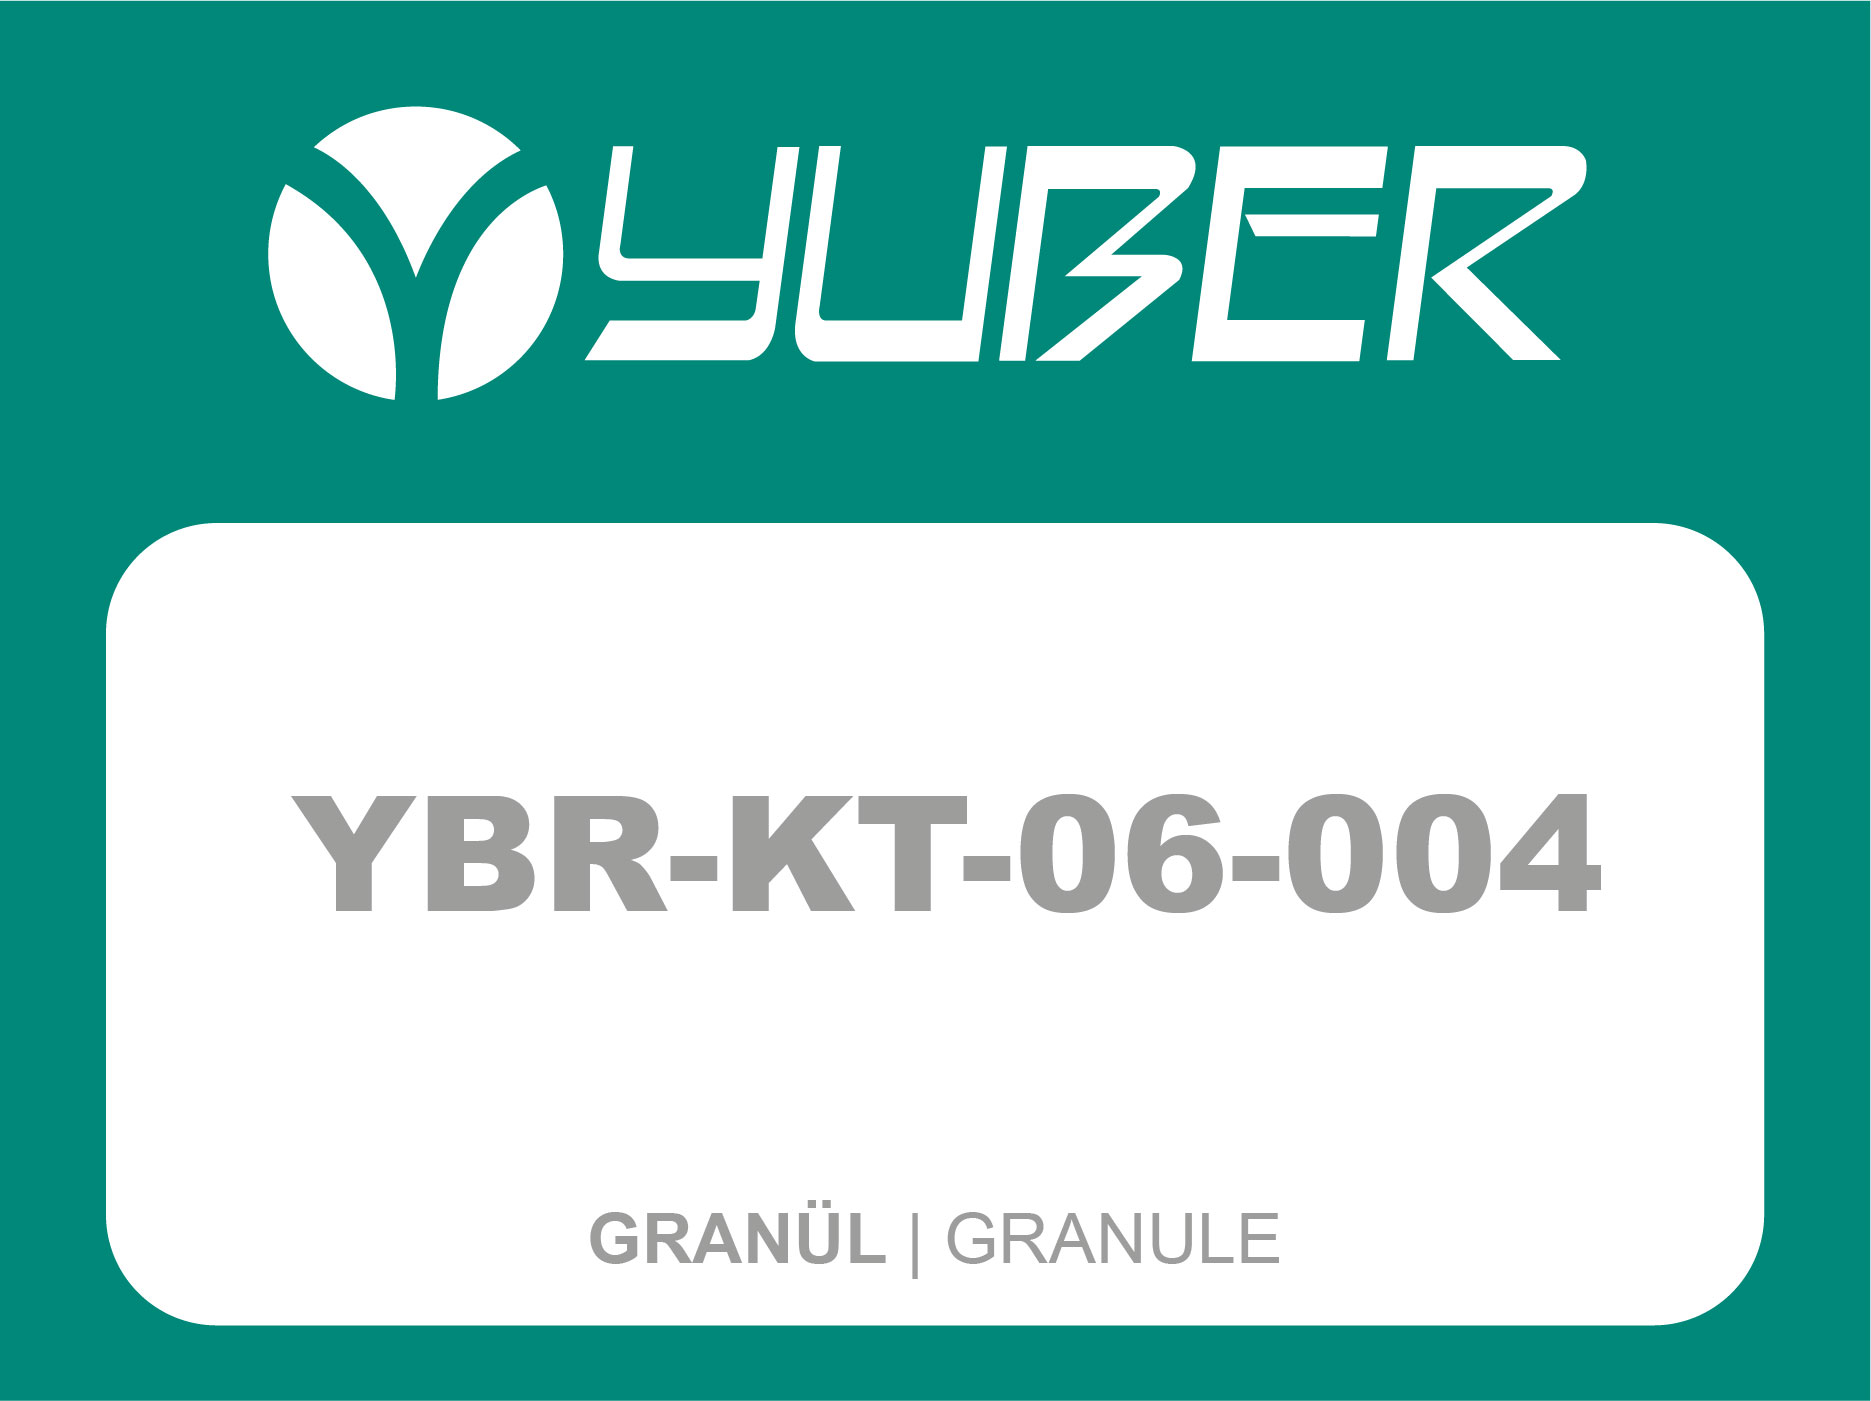 YBR KT 06 004 Granule Yuber Metallurgy